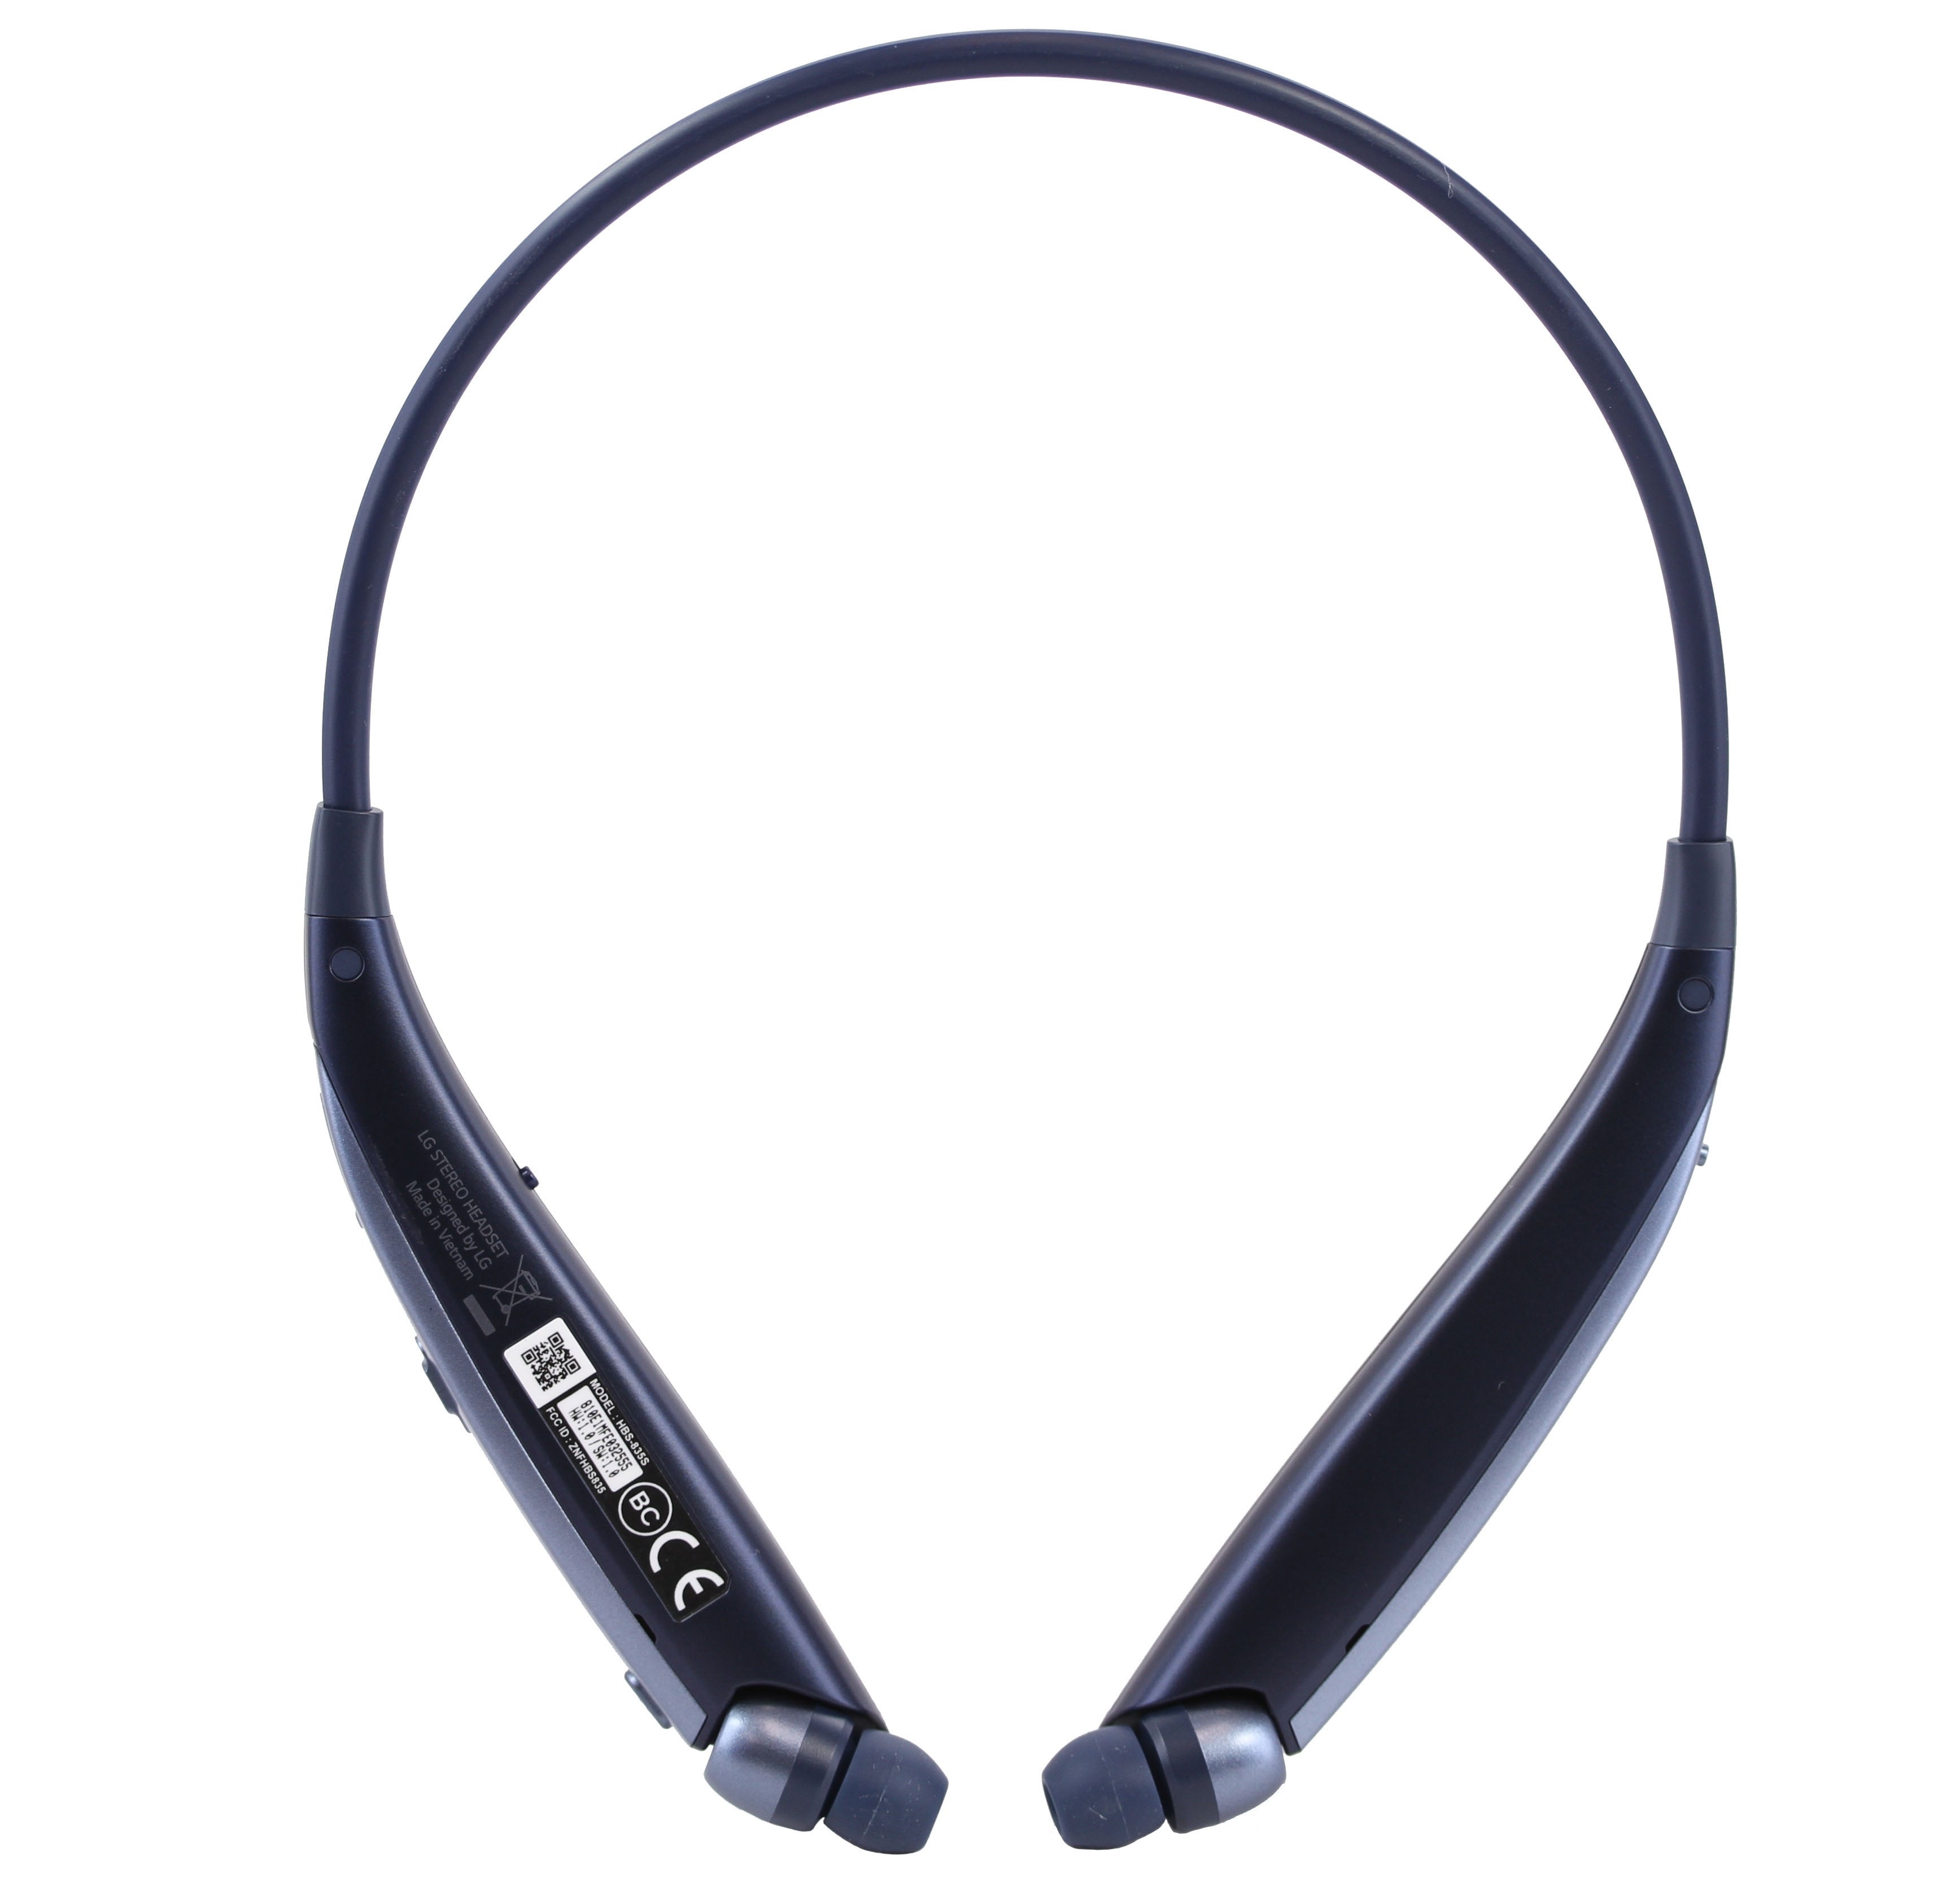 LG TONE Ultra Bluetooth Wireless Stereo Headset - Blue (Refurbished)